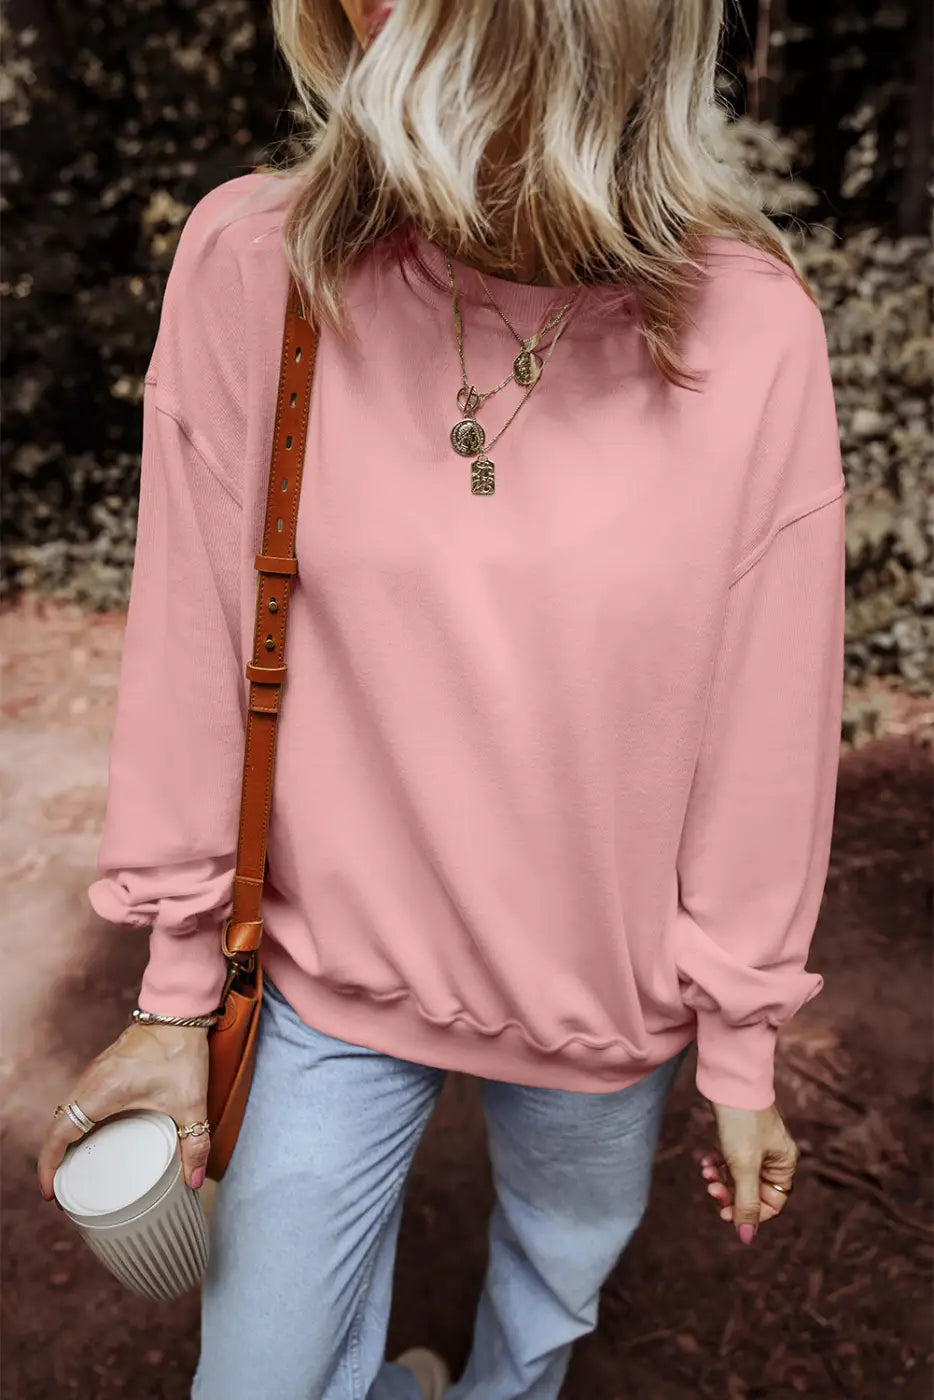 Ribbed relaxation sweatshirt - pink / s / 50% polyester + 45% cotton + 5% elastane - sweatshirts